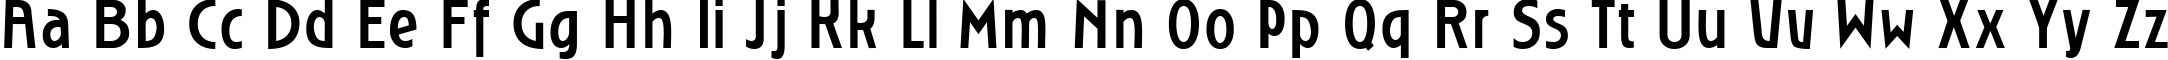 Пример написания английского алфавита шрифтом RoslynGothic